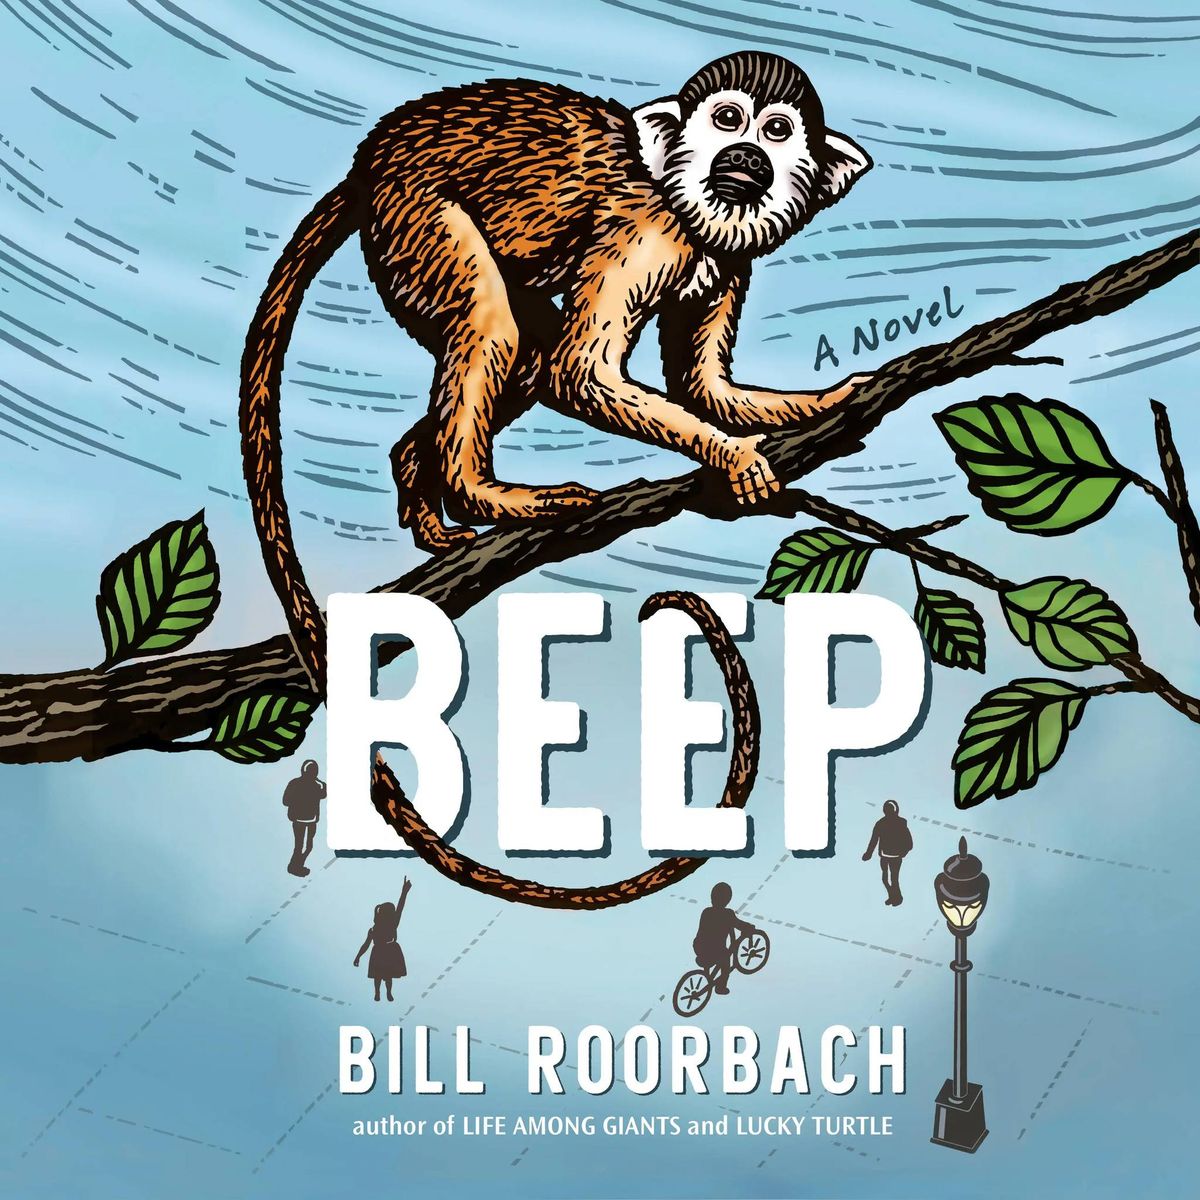 Bill Roorbach's "Beep" Book Launch